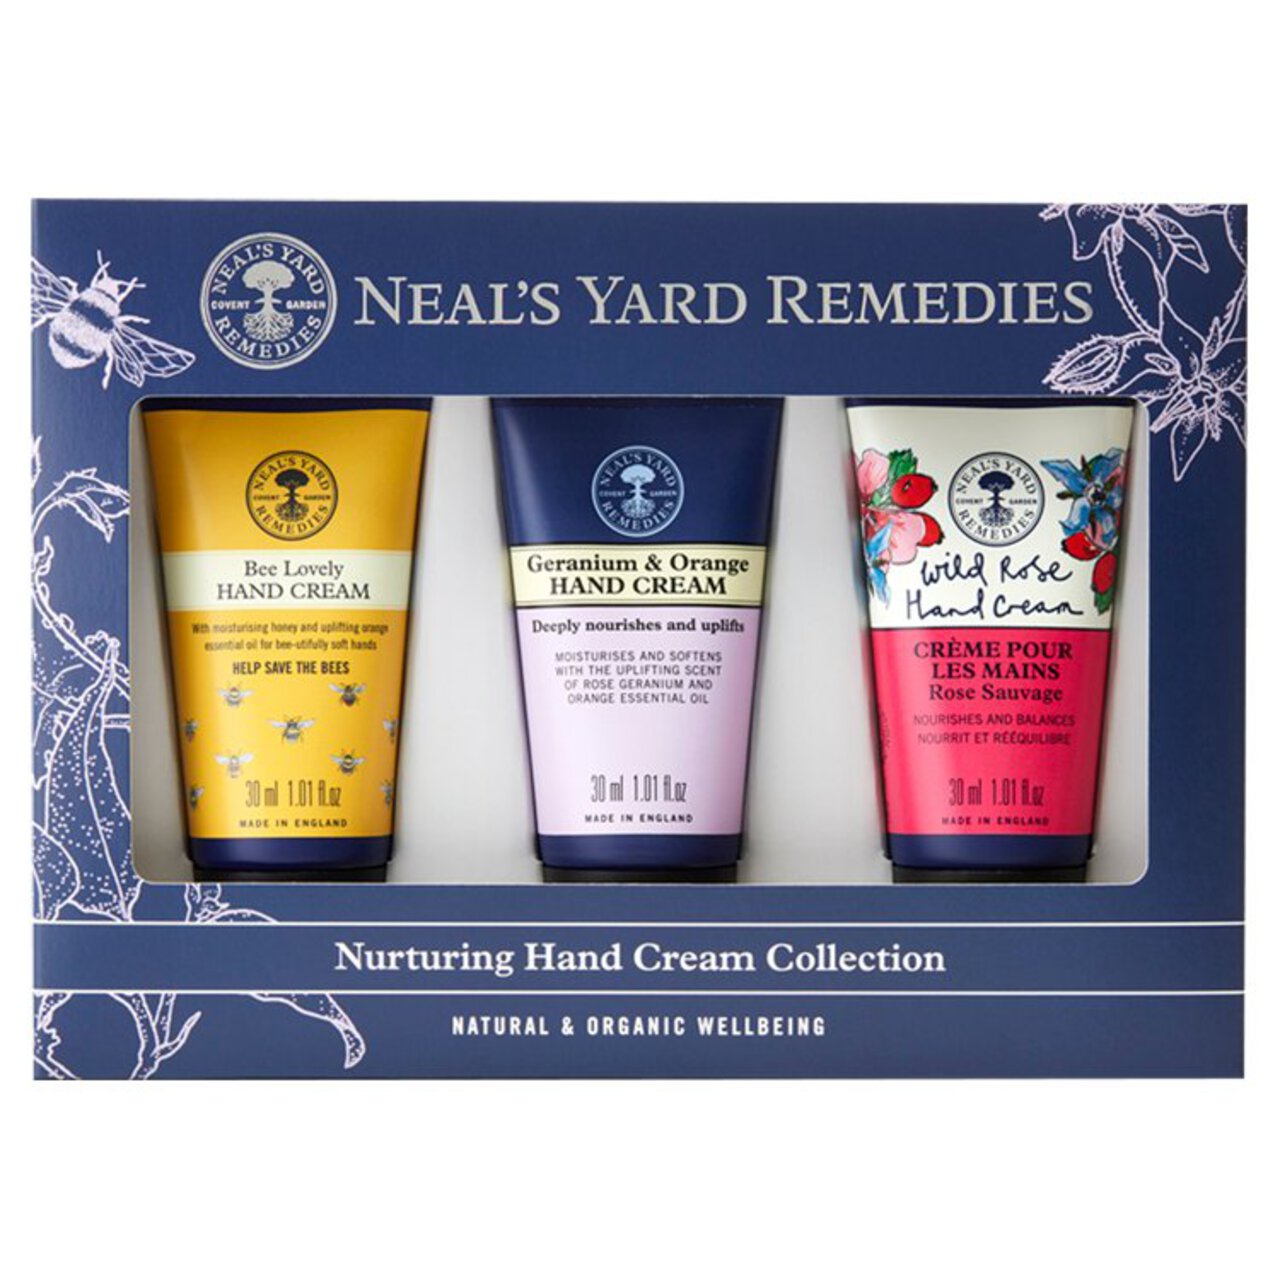 Neal's Yard Remedies Nurturing Handcare Collection 2023